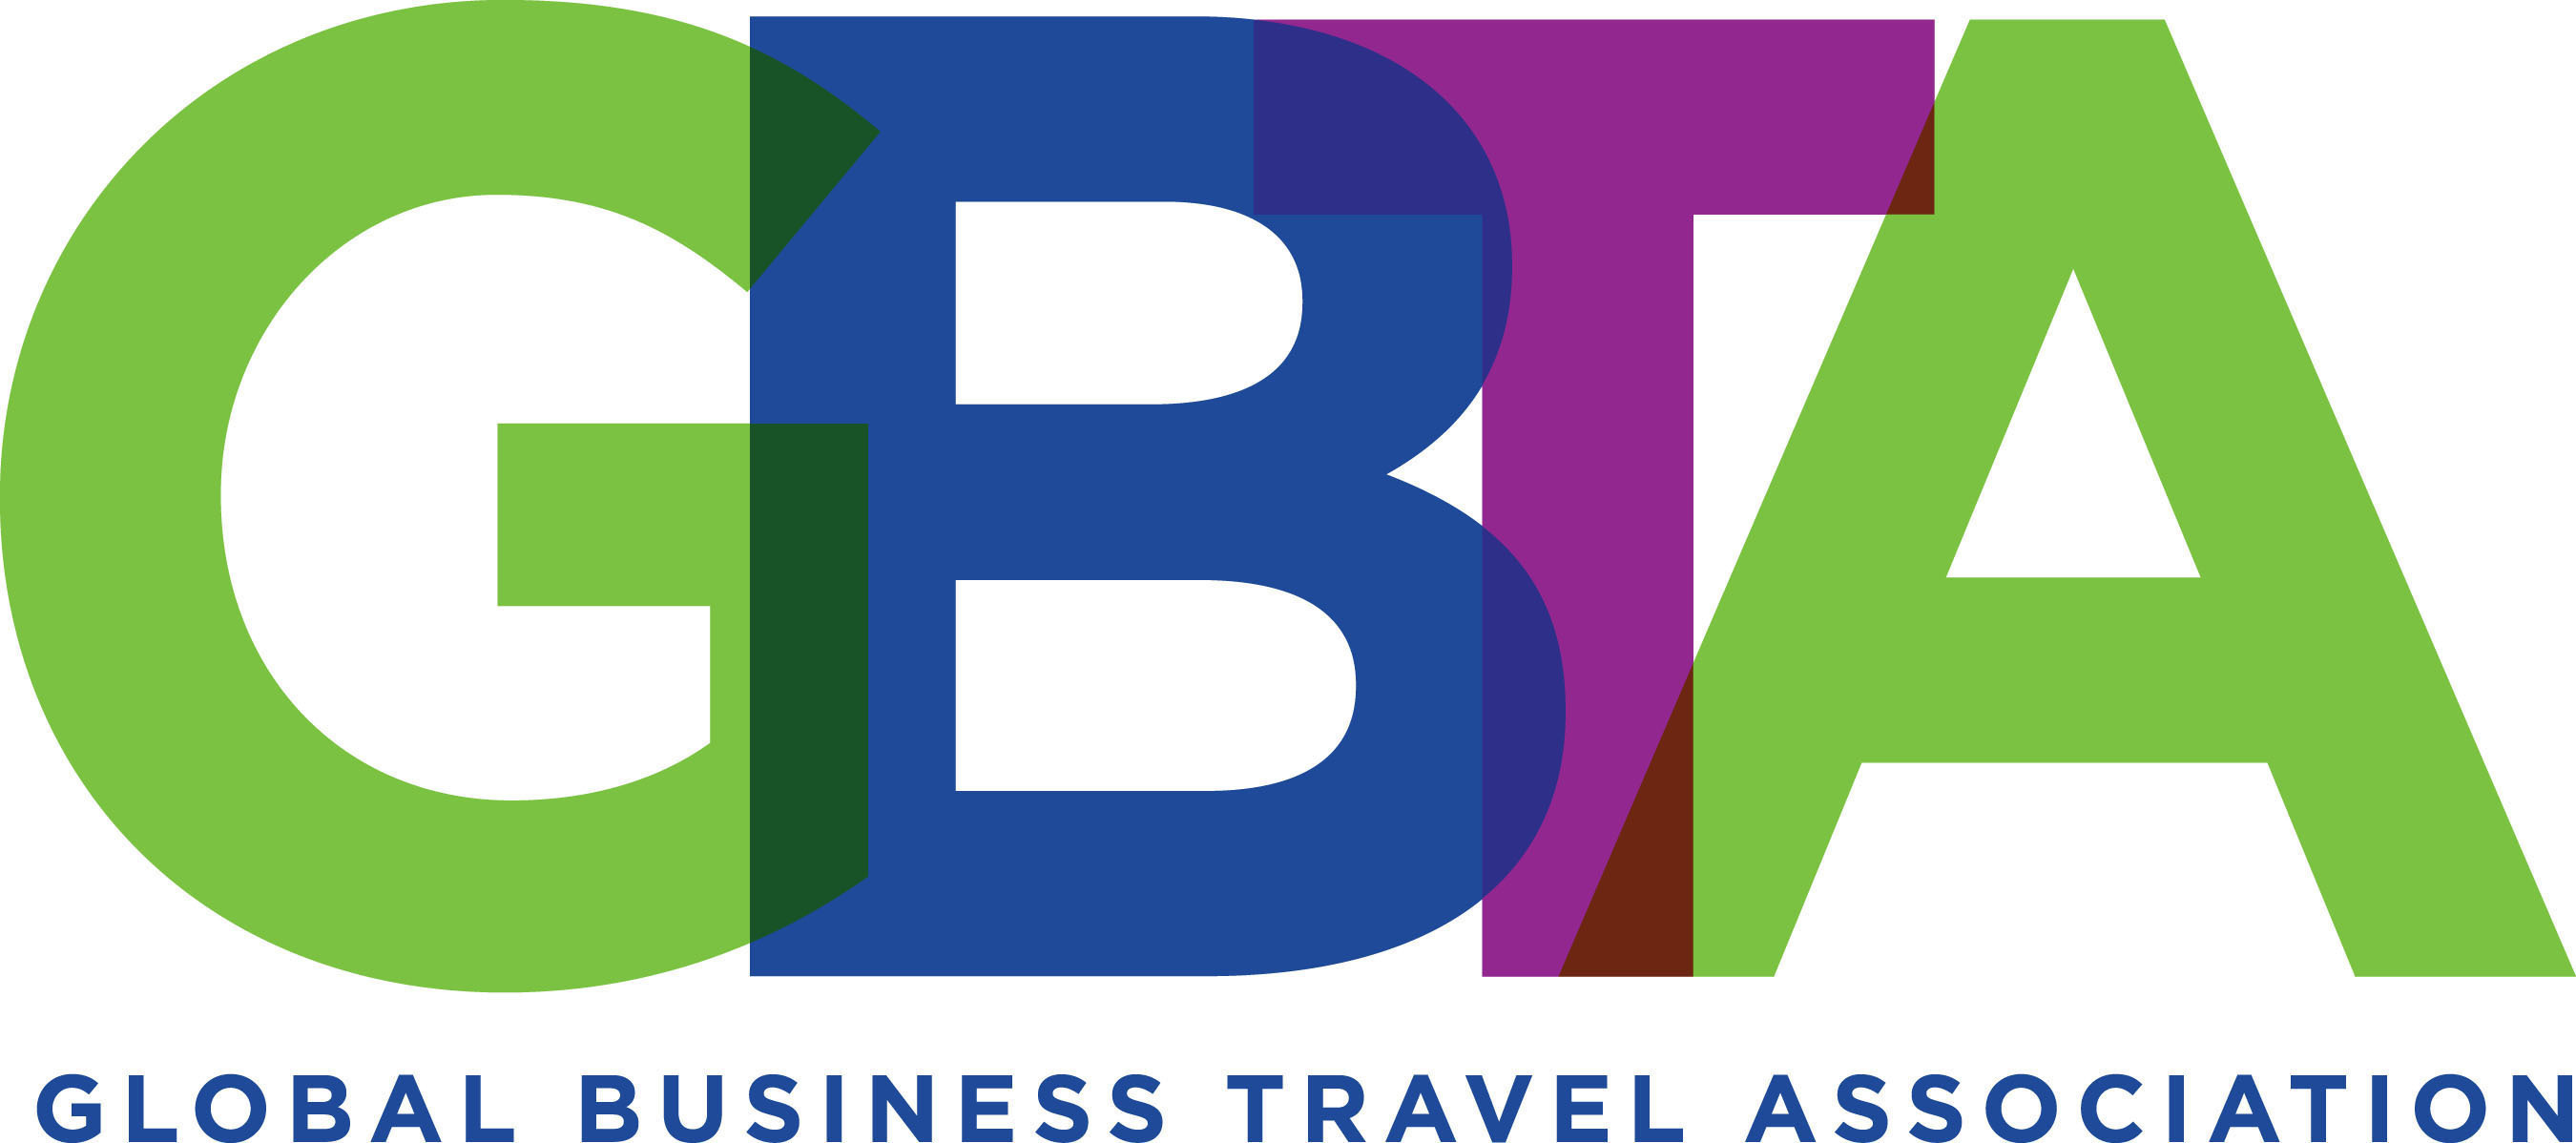 he Global Business Travel Association